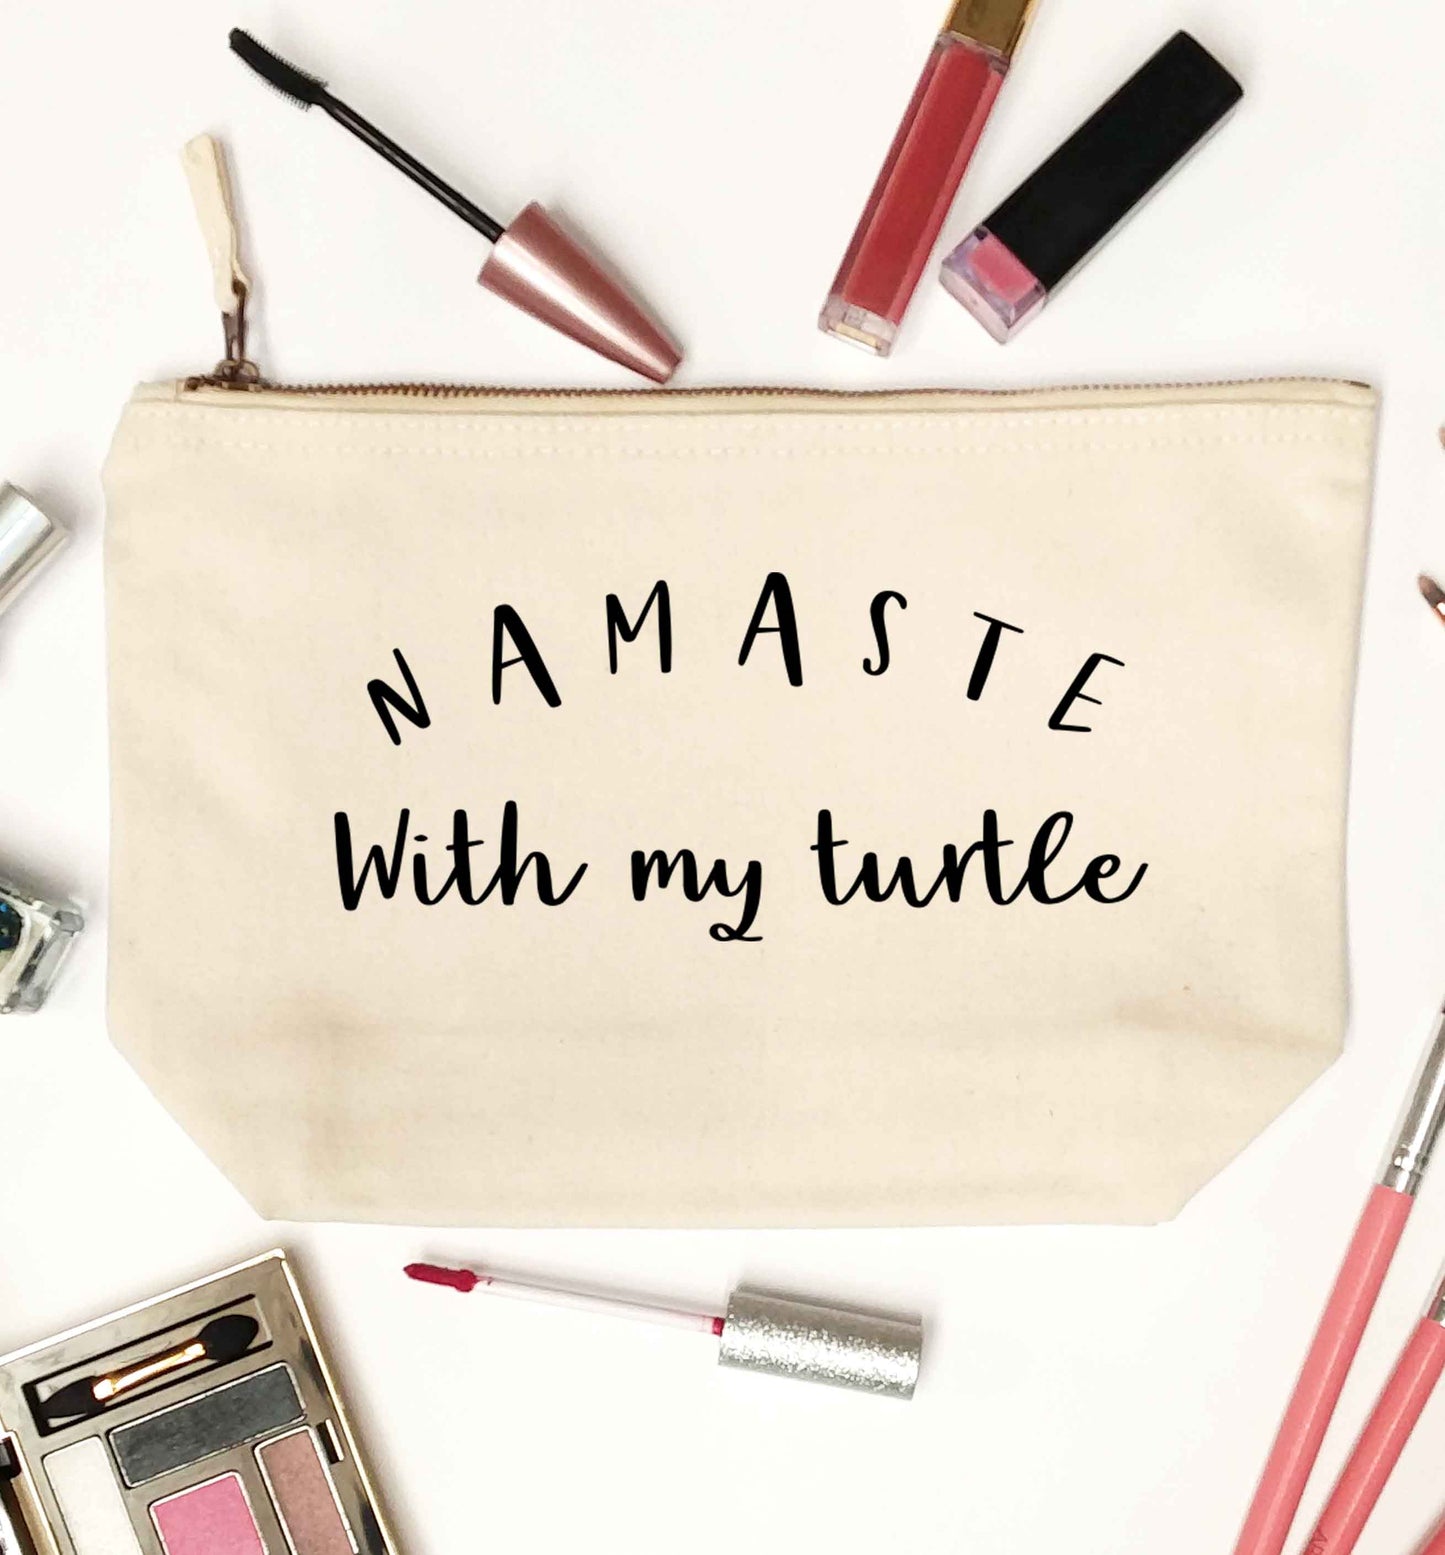 Namaste with my turtle natural makeup bag